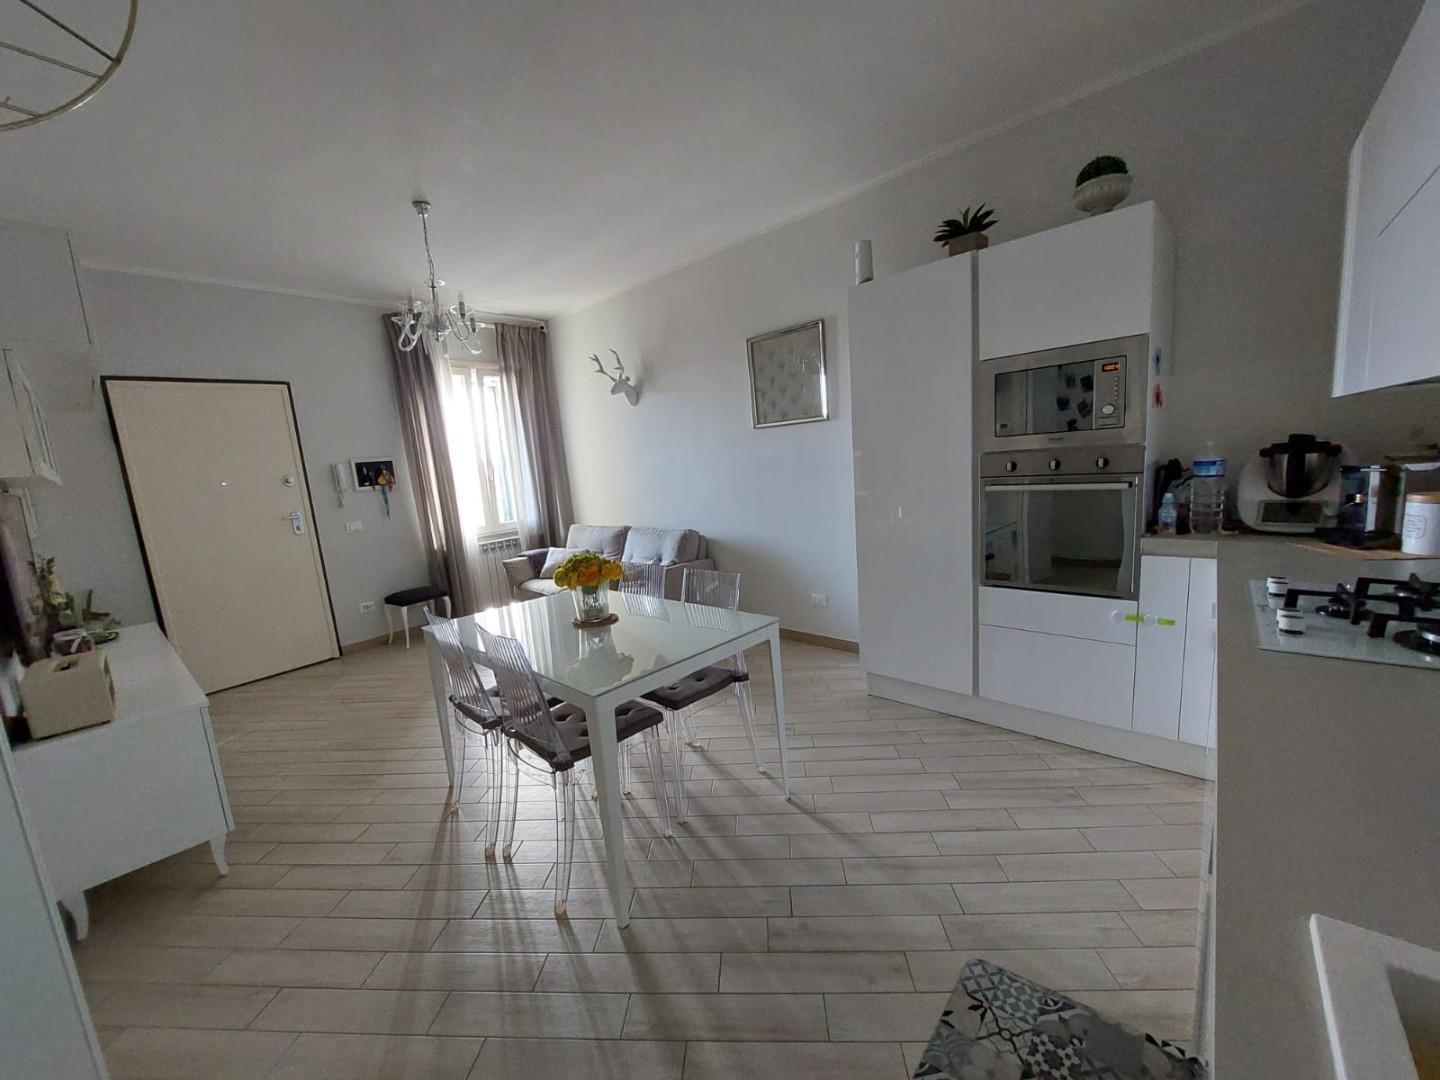 Apartment for sale in Calcinaia (PI)